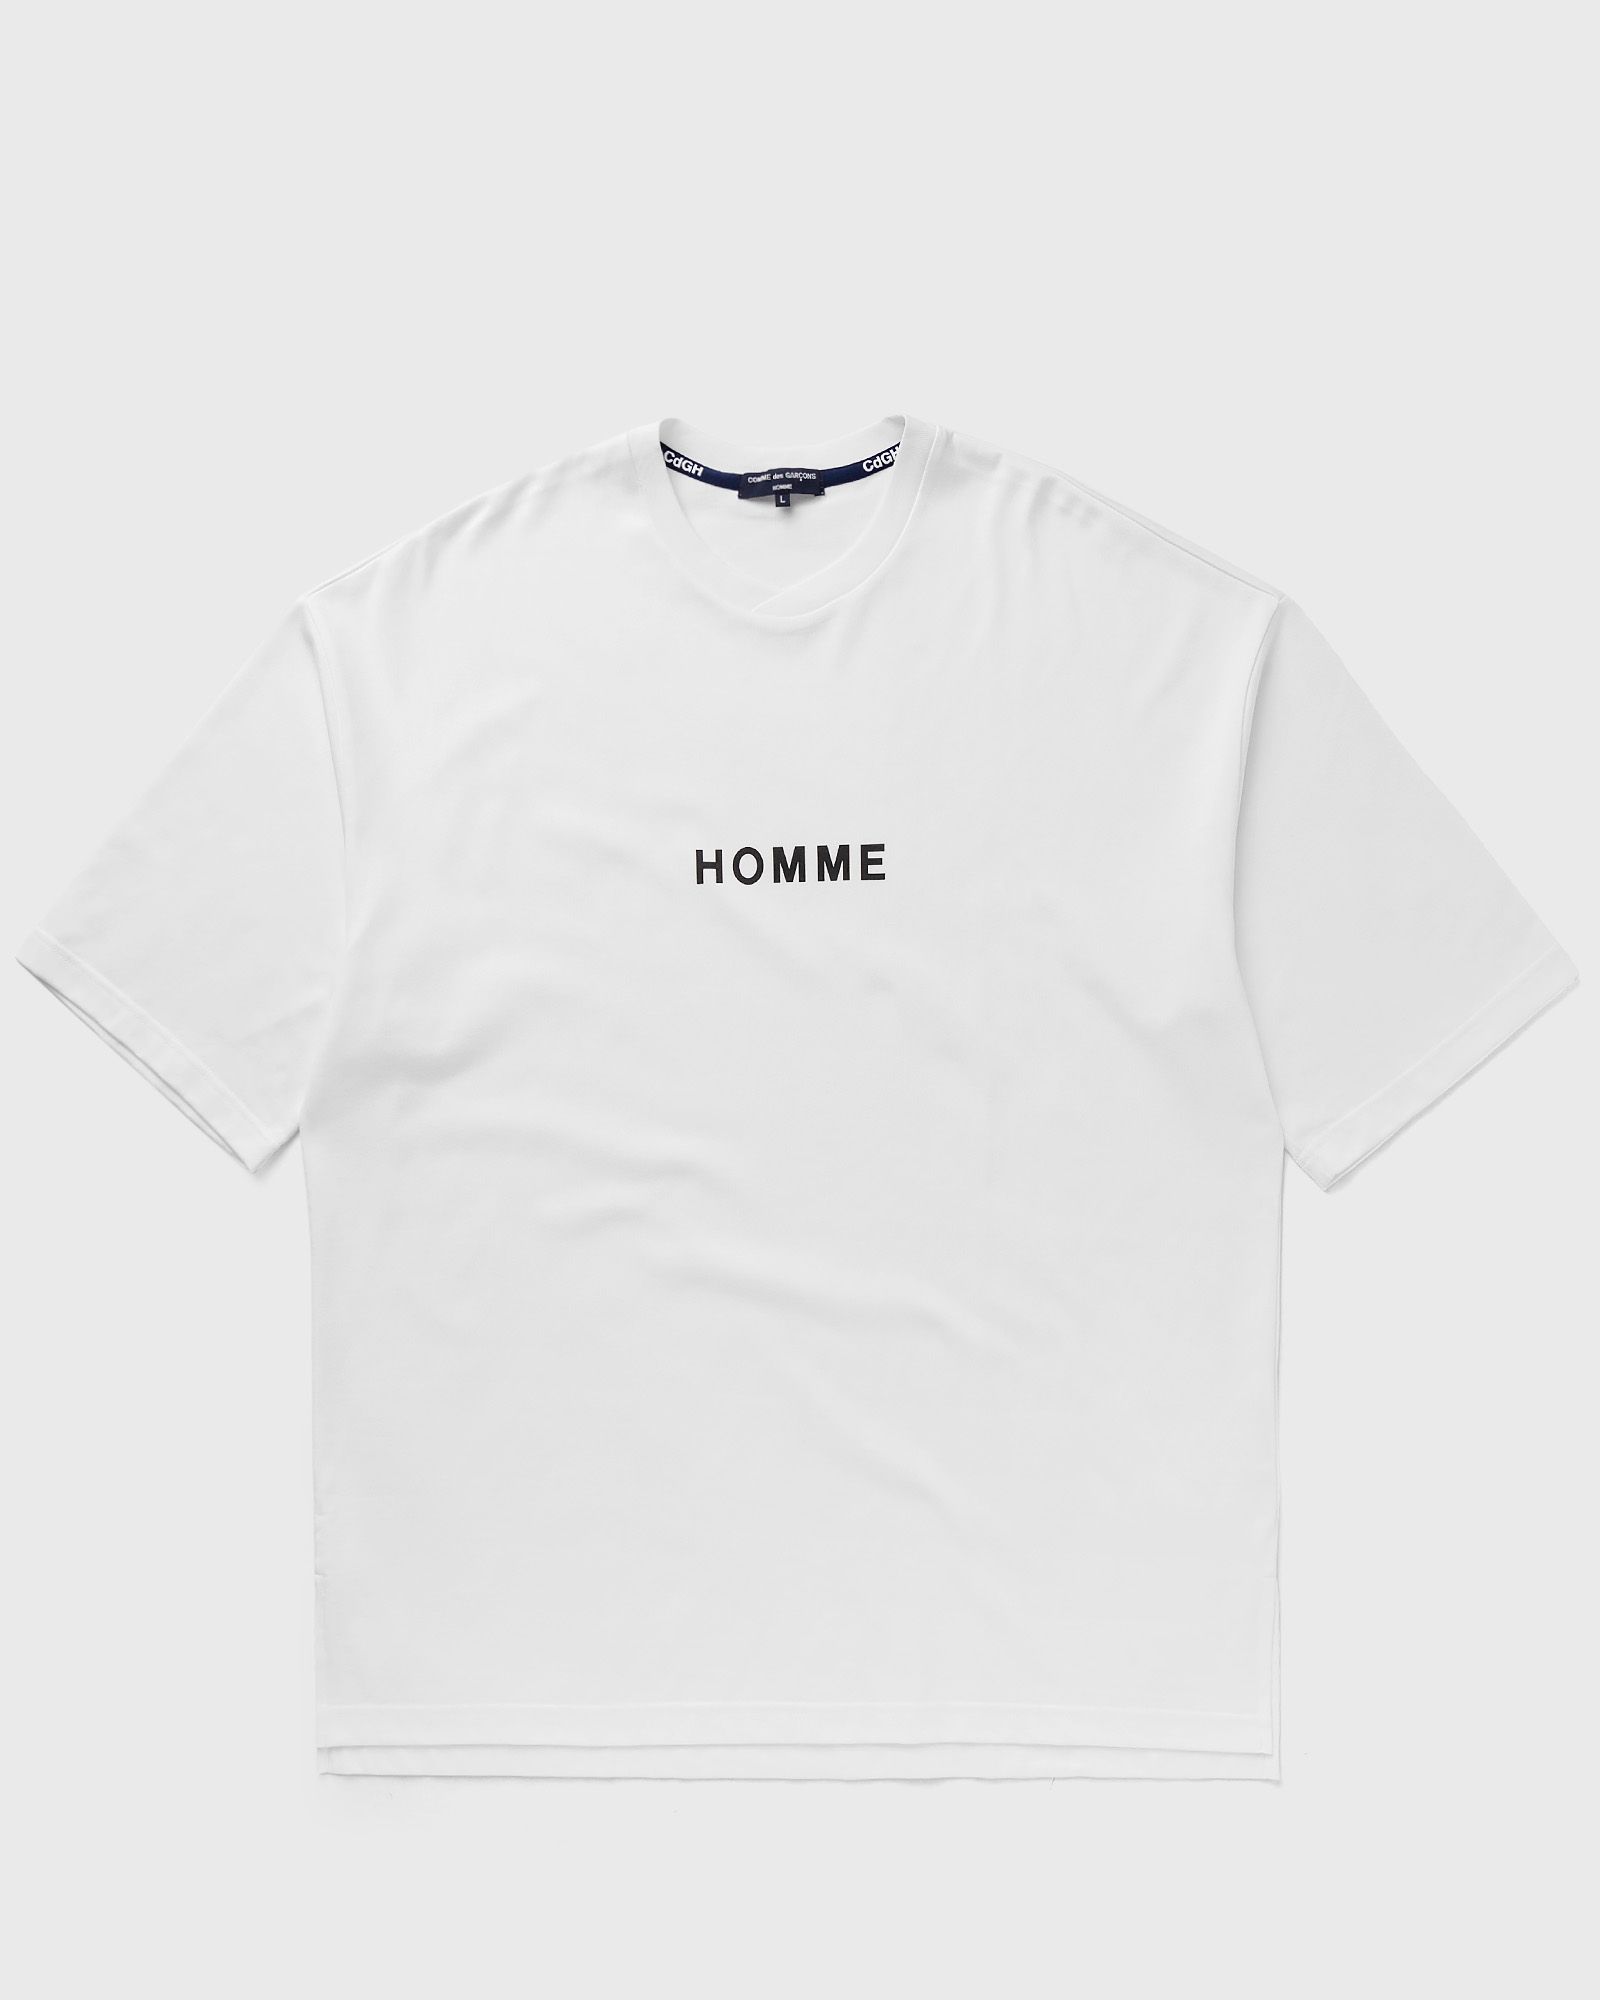 Comme des Garçons Homme - logo t-shirt men shortsleeves white in größe:l